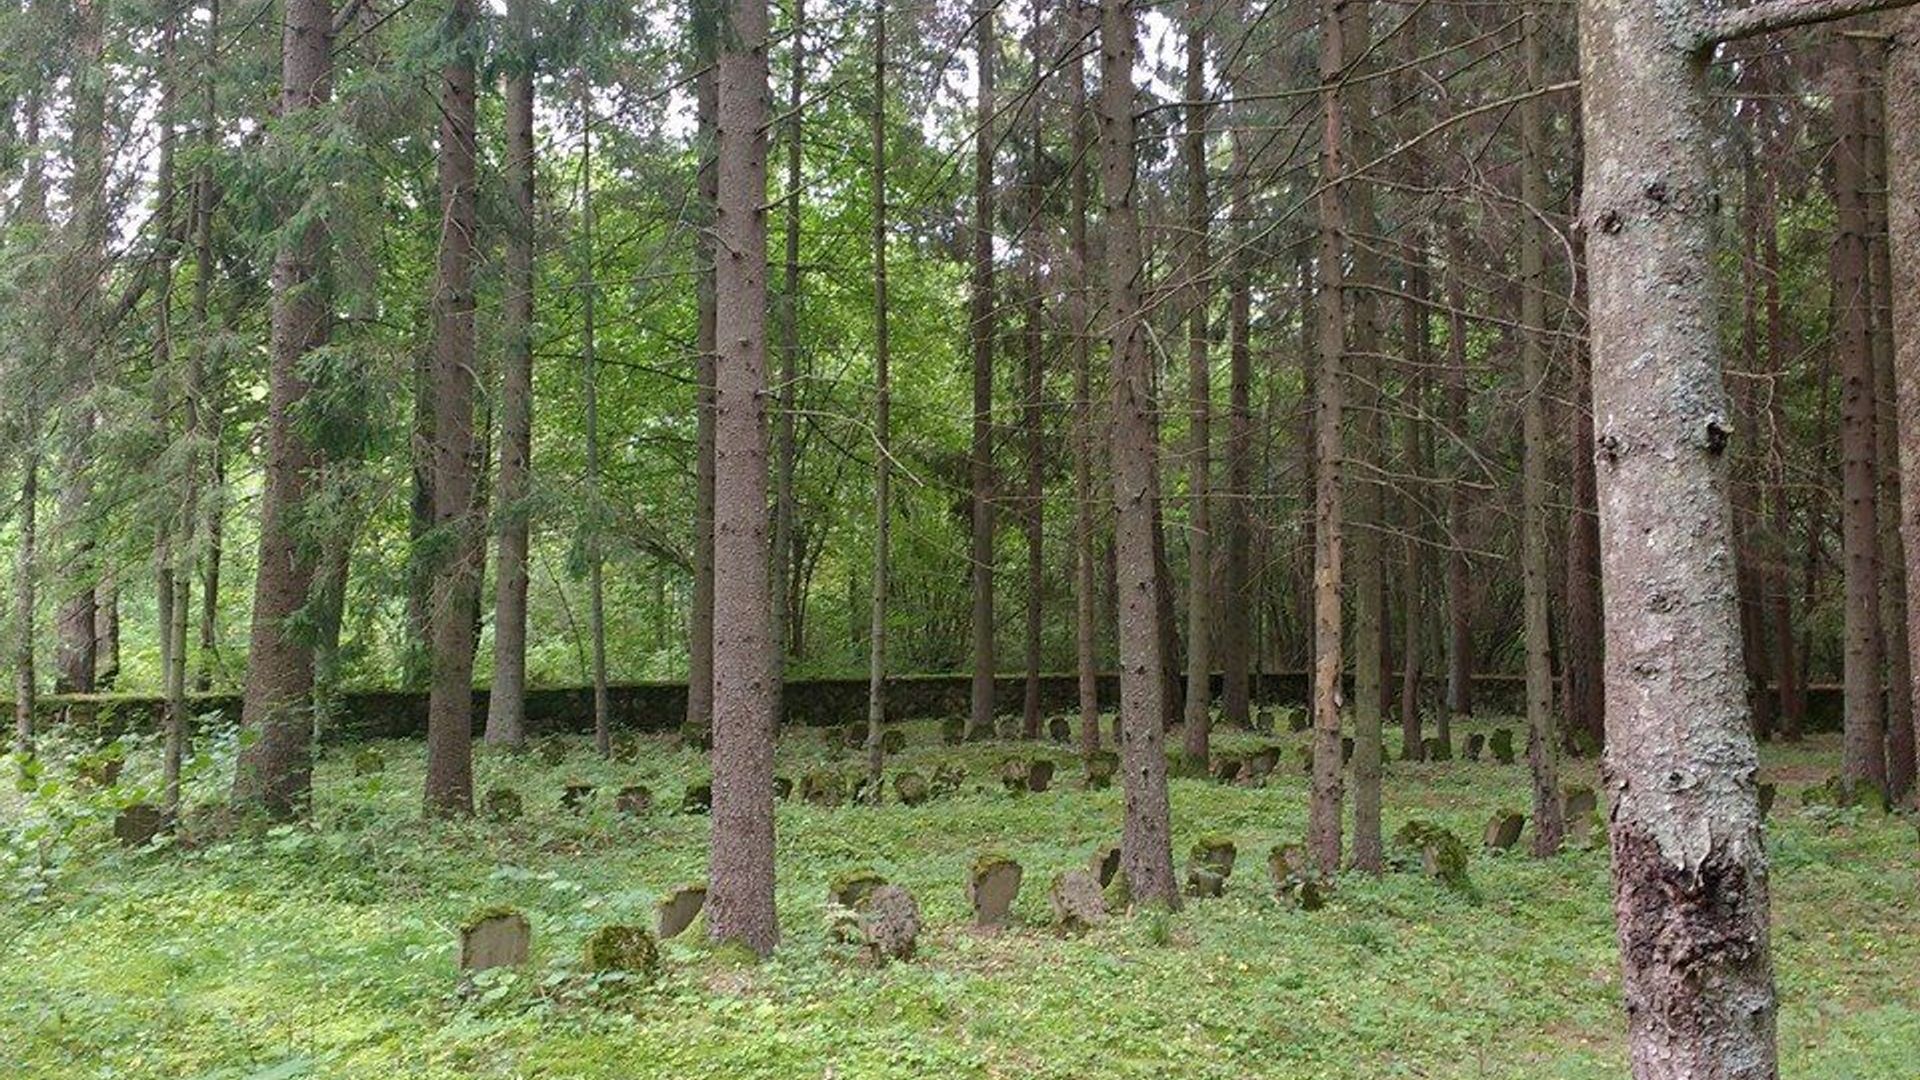 World War I Cemetery